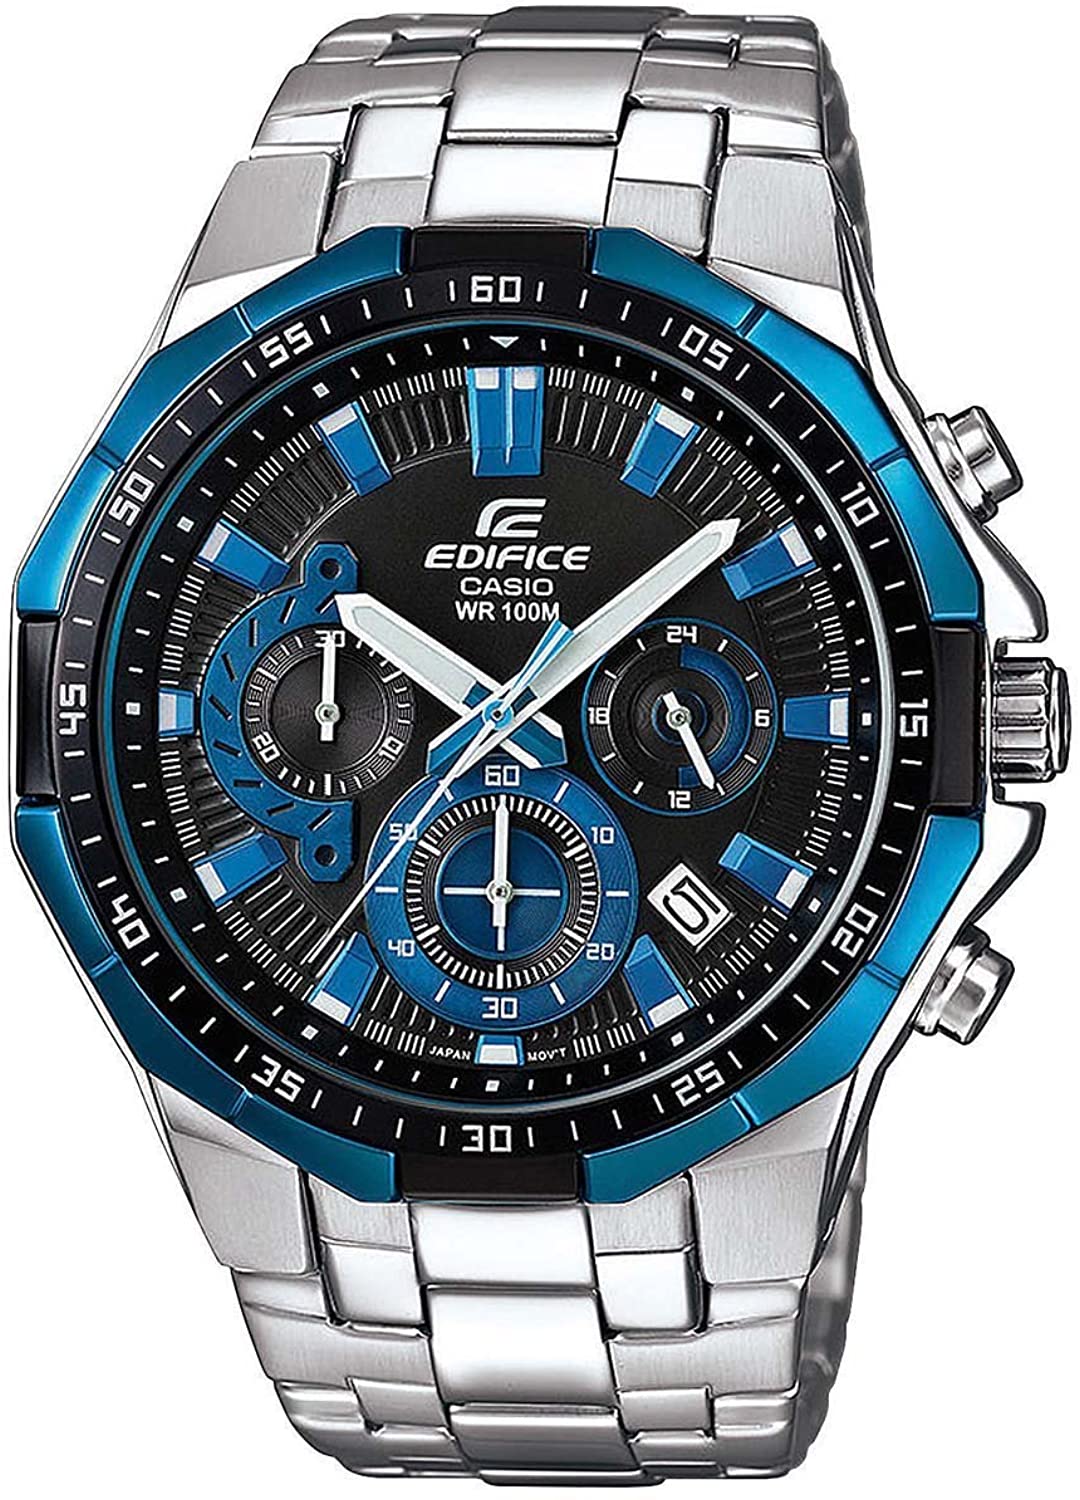 EFR-554D-1A2 Mens Blue Business Casio Watch